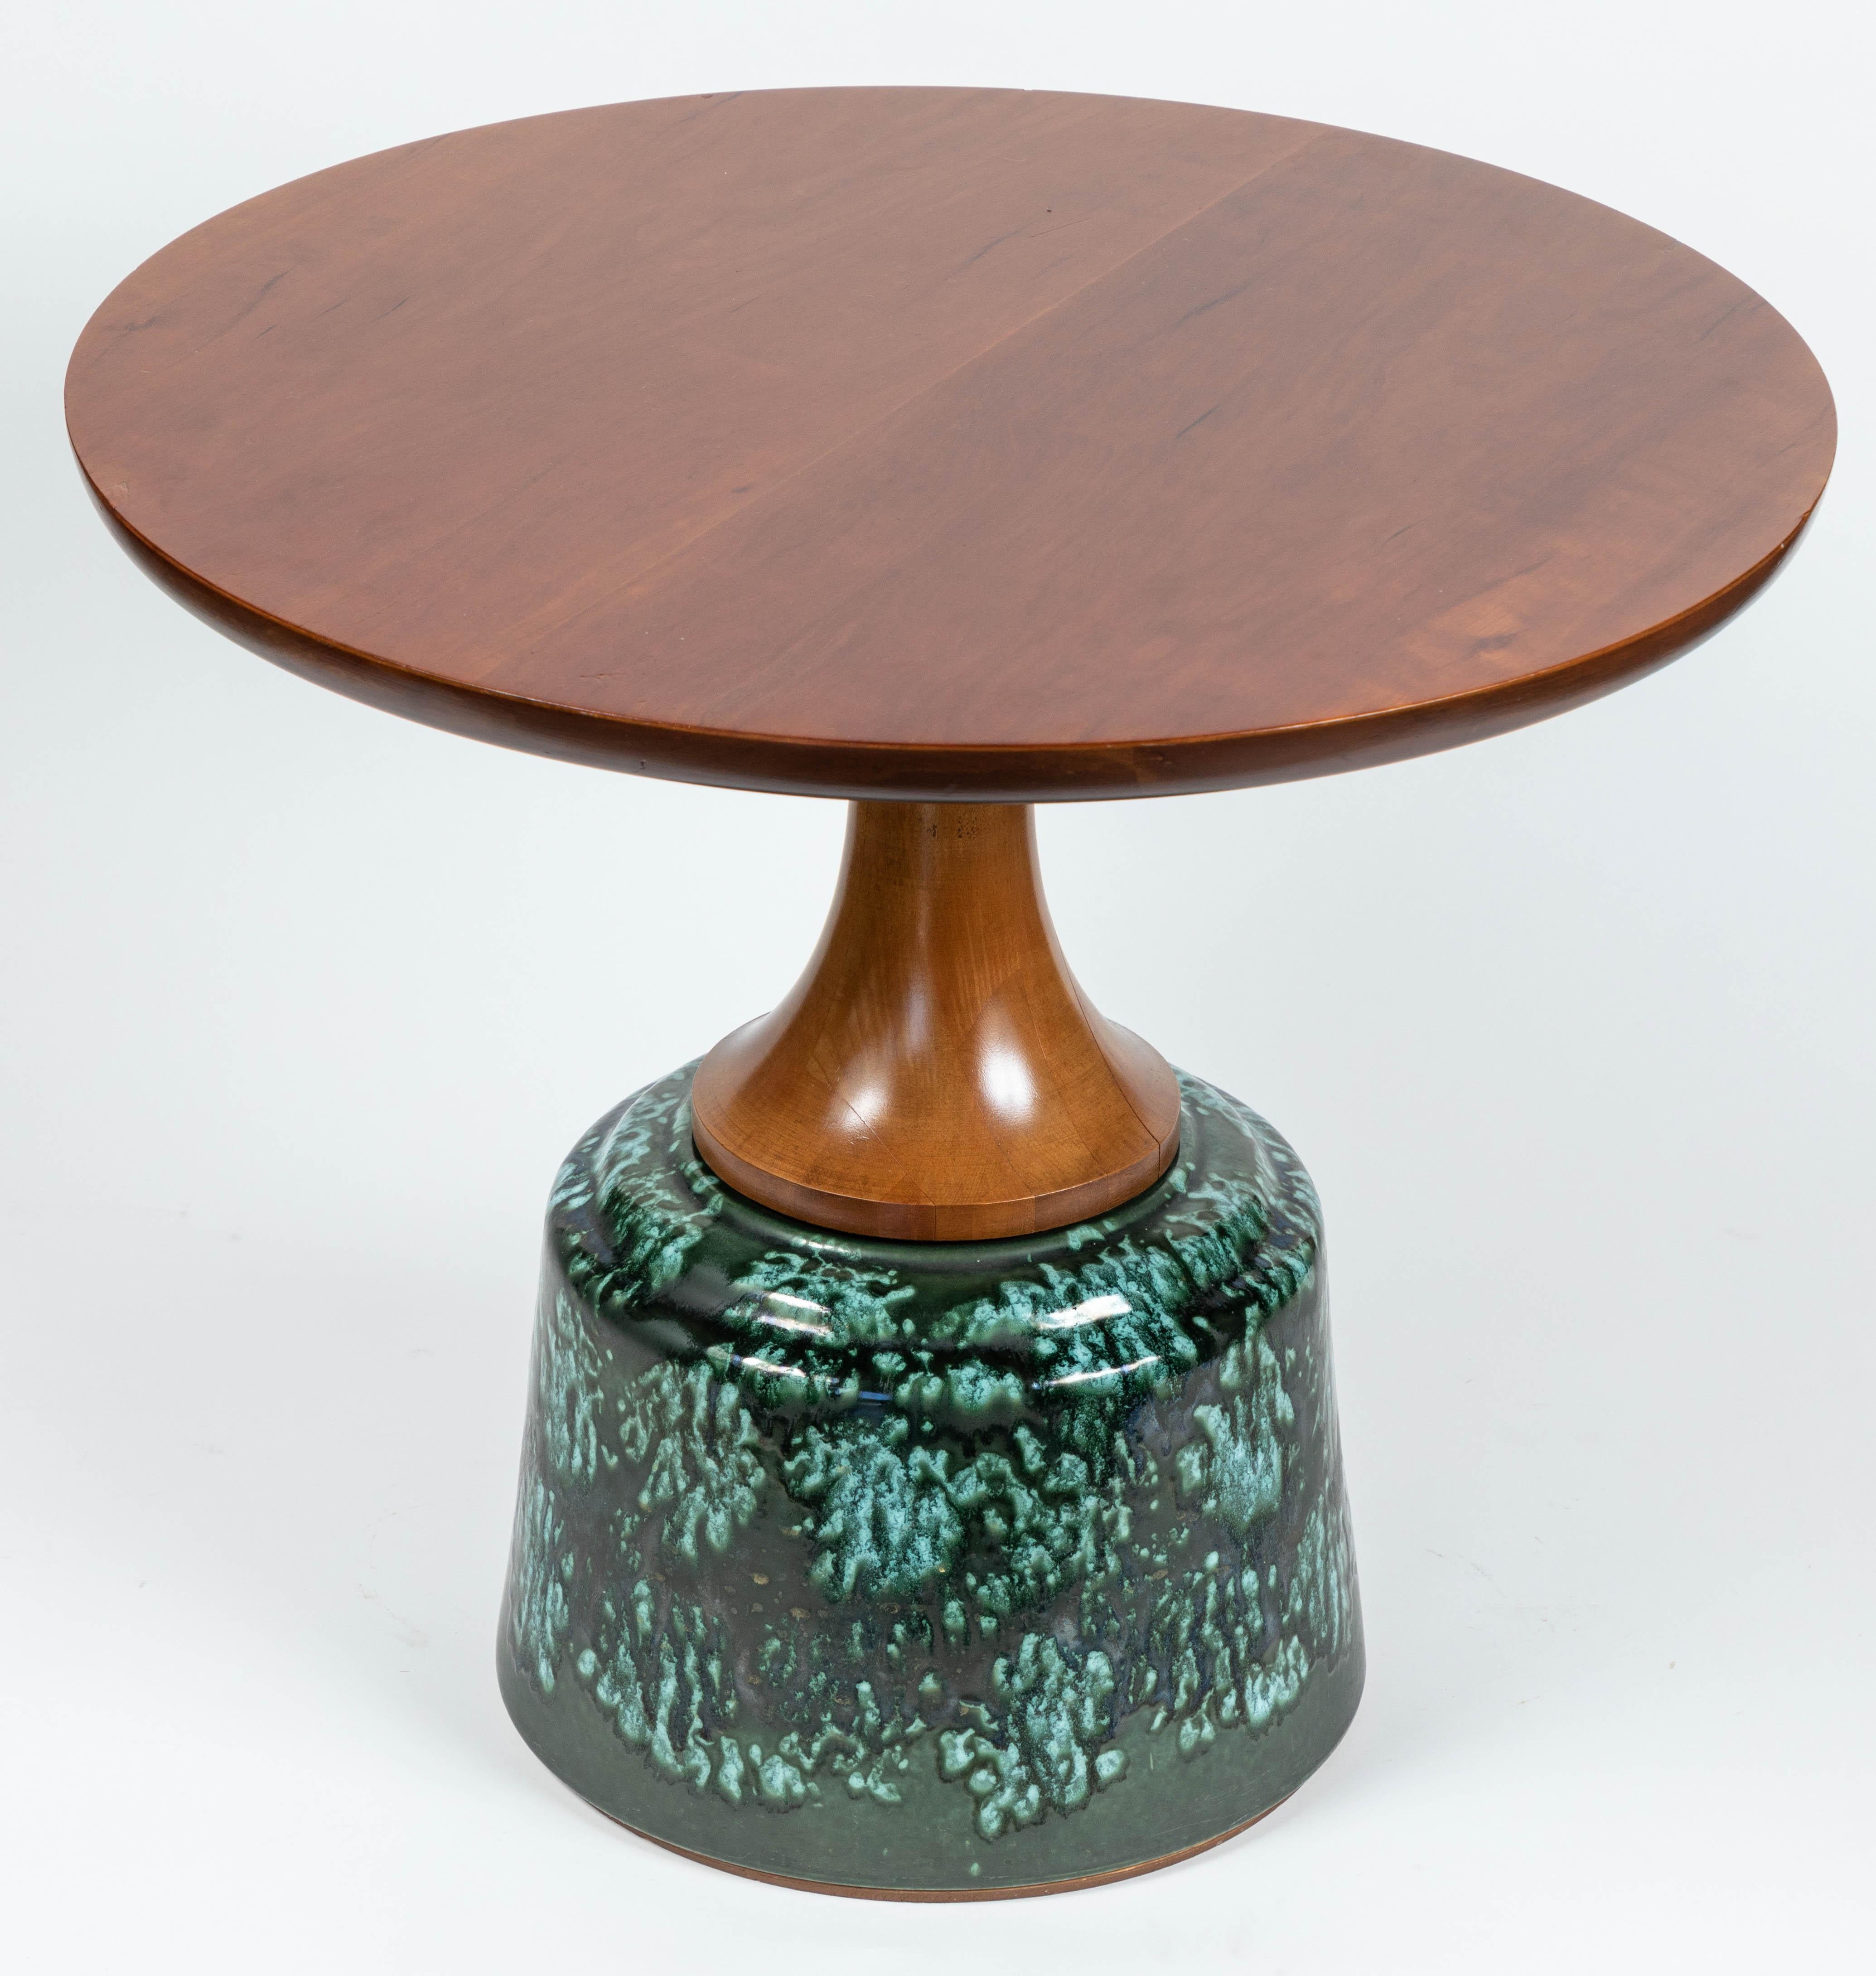 Vintage John Van Koert occasional table by Drexel / style of Dunbar Wormley Milo Baughman / walnut wood with beautiful green lava glazing on the ceramic base, circa 1957.